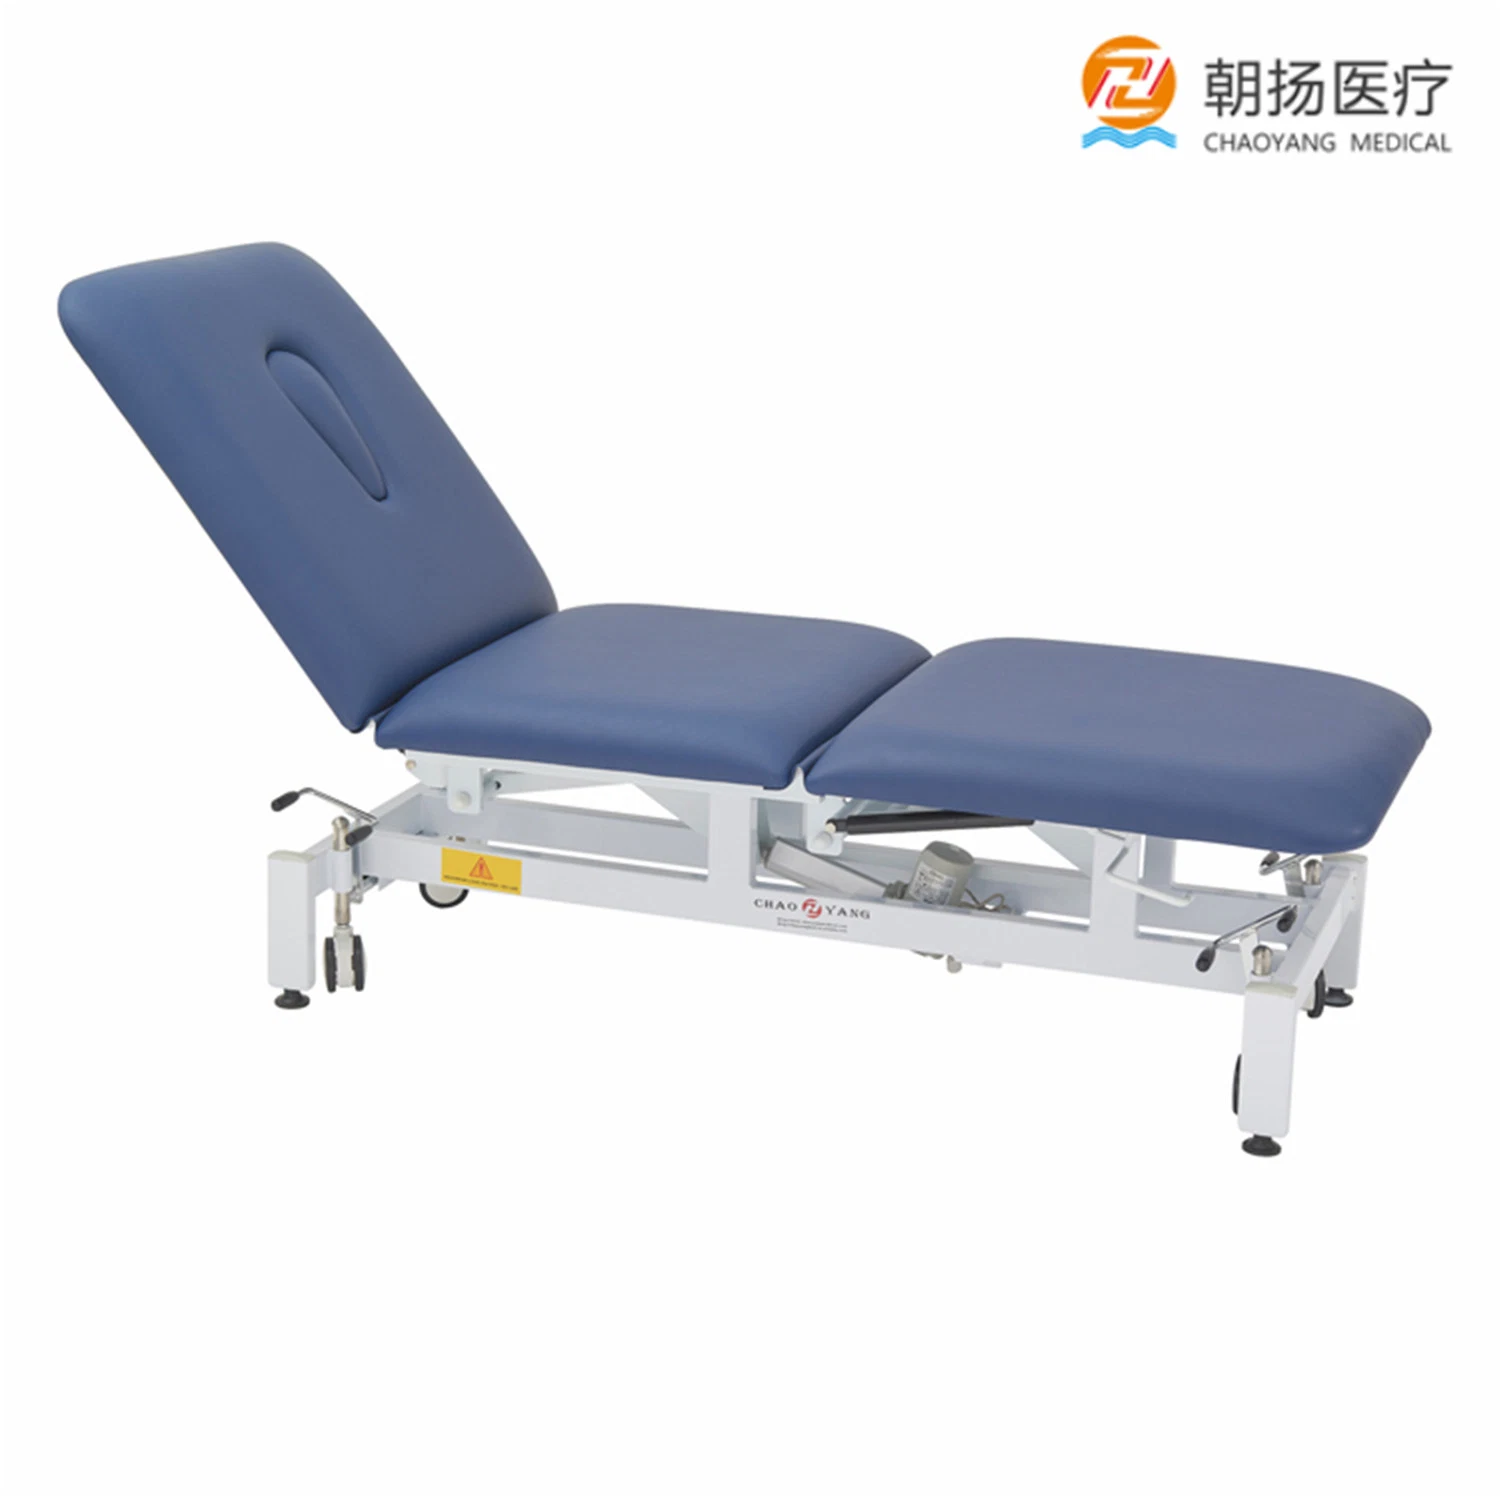 CY-C108 هوت سسل مستشفى سرير PT طاولة/قاعدة علاج التدريب طاولة العلاج الفيزيائي طاولة العلاج الطبيعي